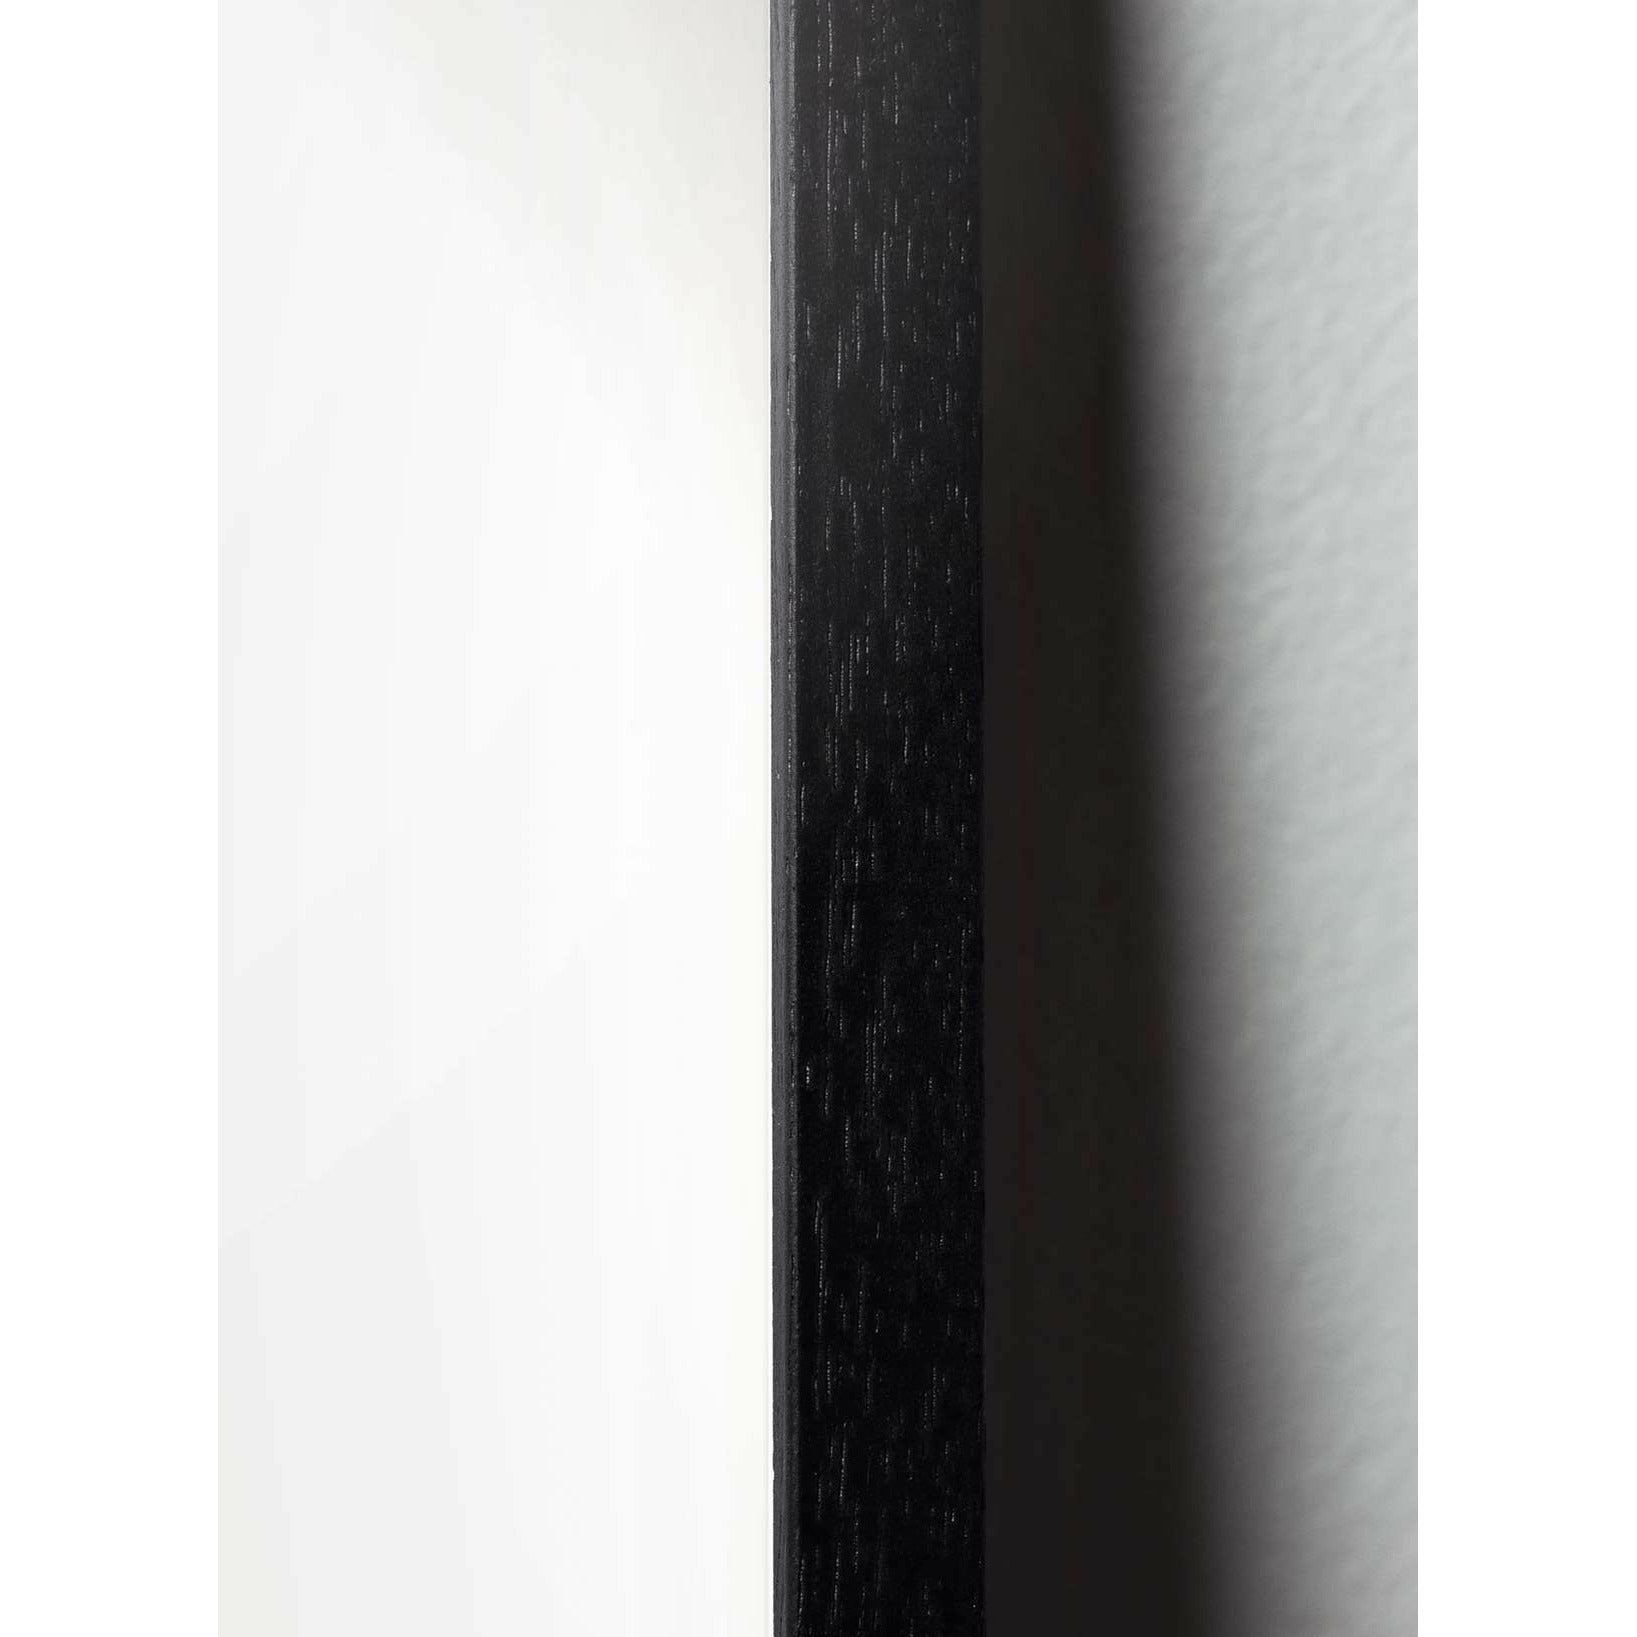 Brainchild Vintergapslinjeposter, ram i svart målat trä 70x100 cm, vit bakgrund